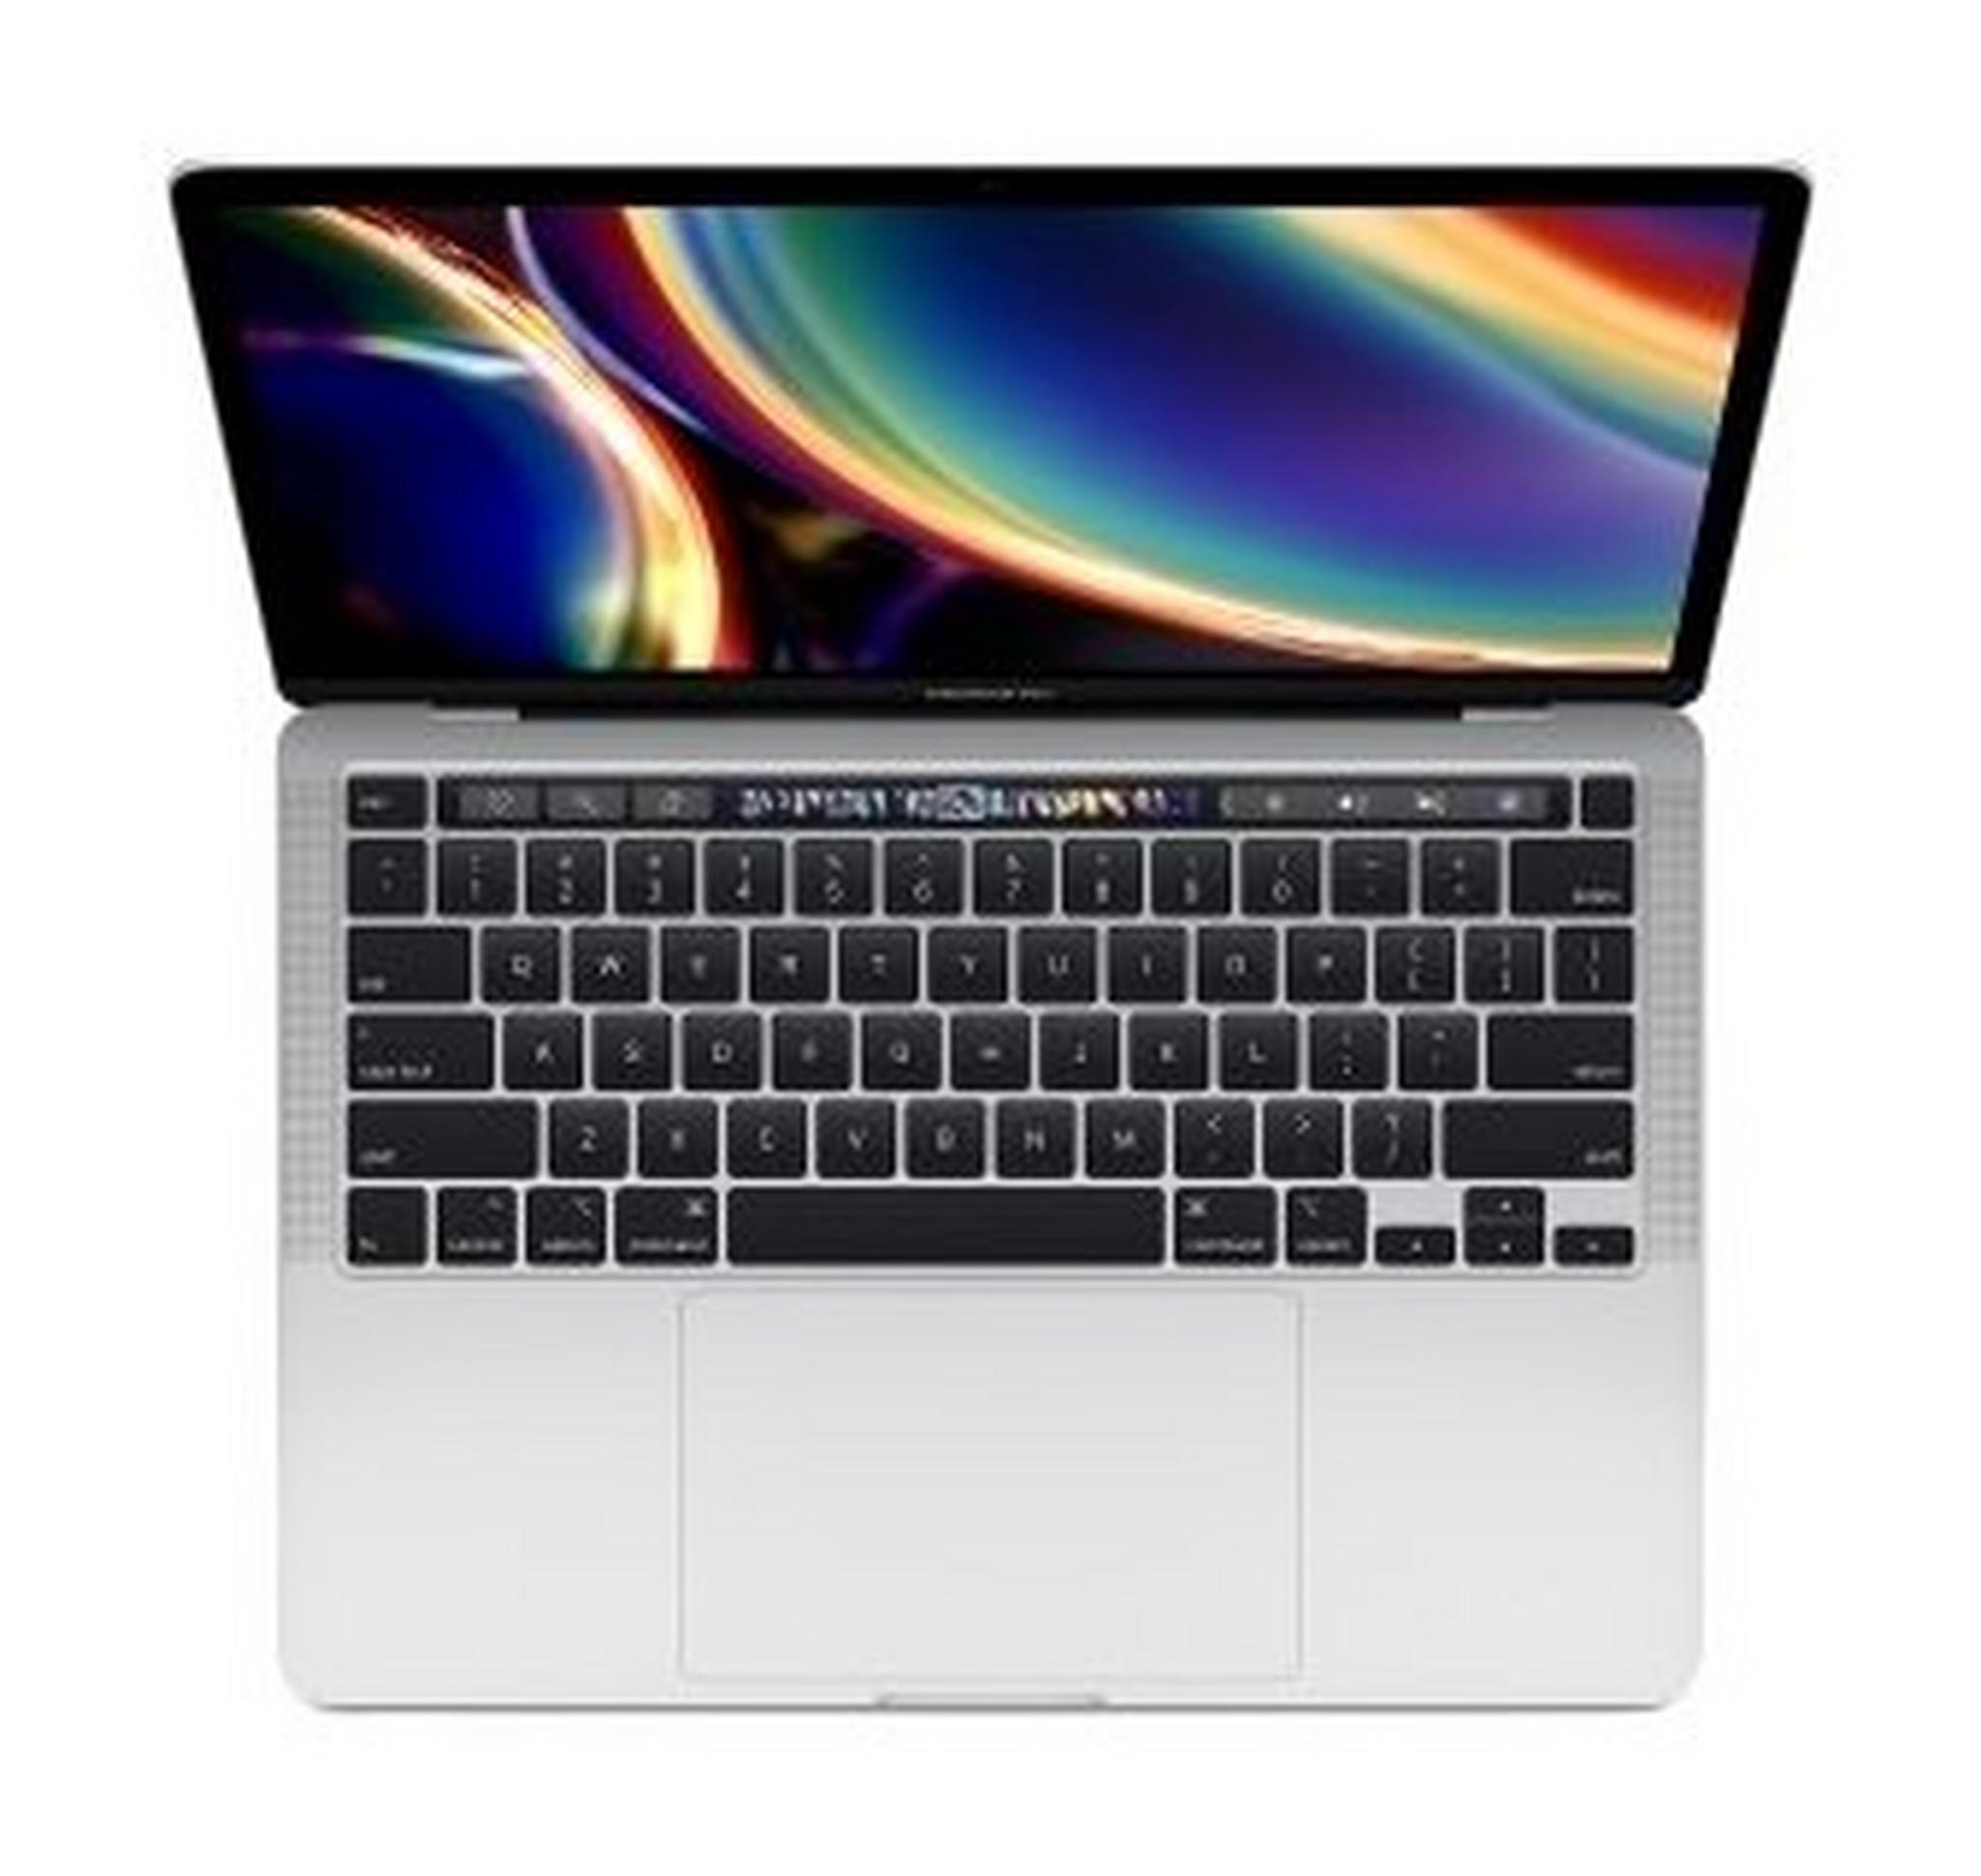 Apple Macbook Pro 8th Gen Core i5 8GB RAM 512GB SSD 13.3-inch Laptop (MXK72AB/A) - Silver